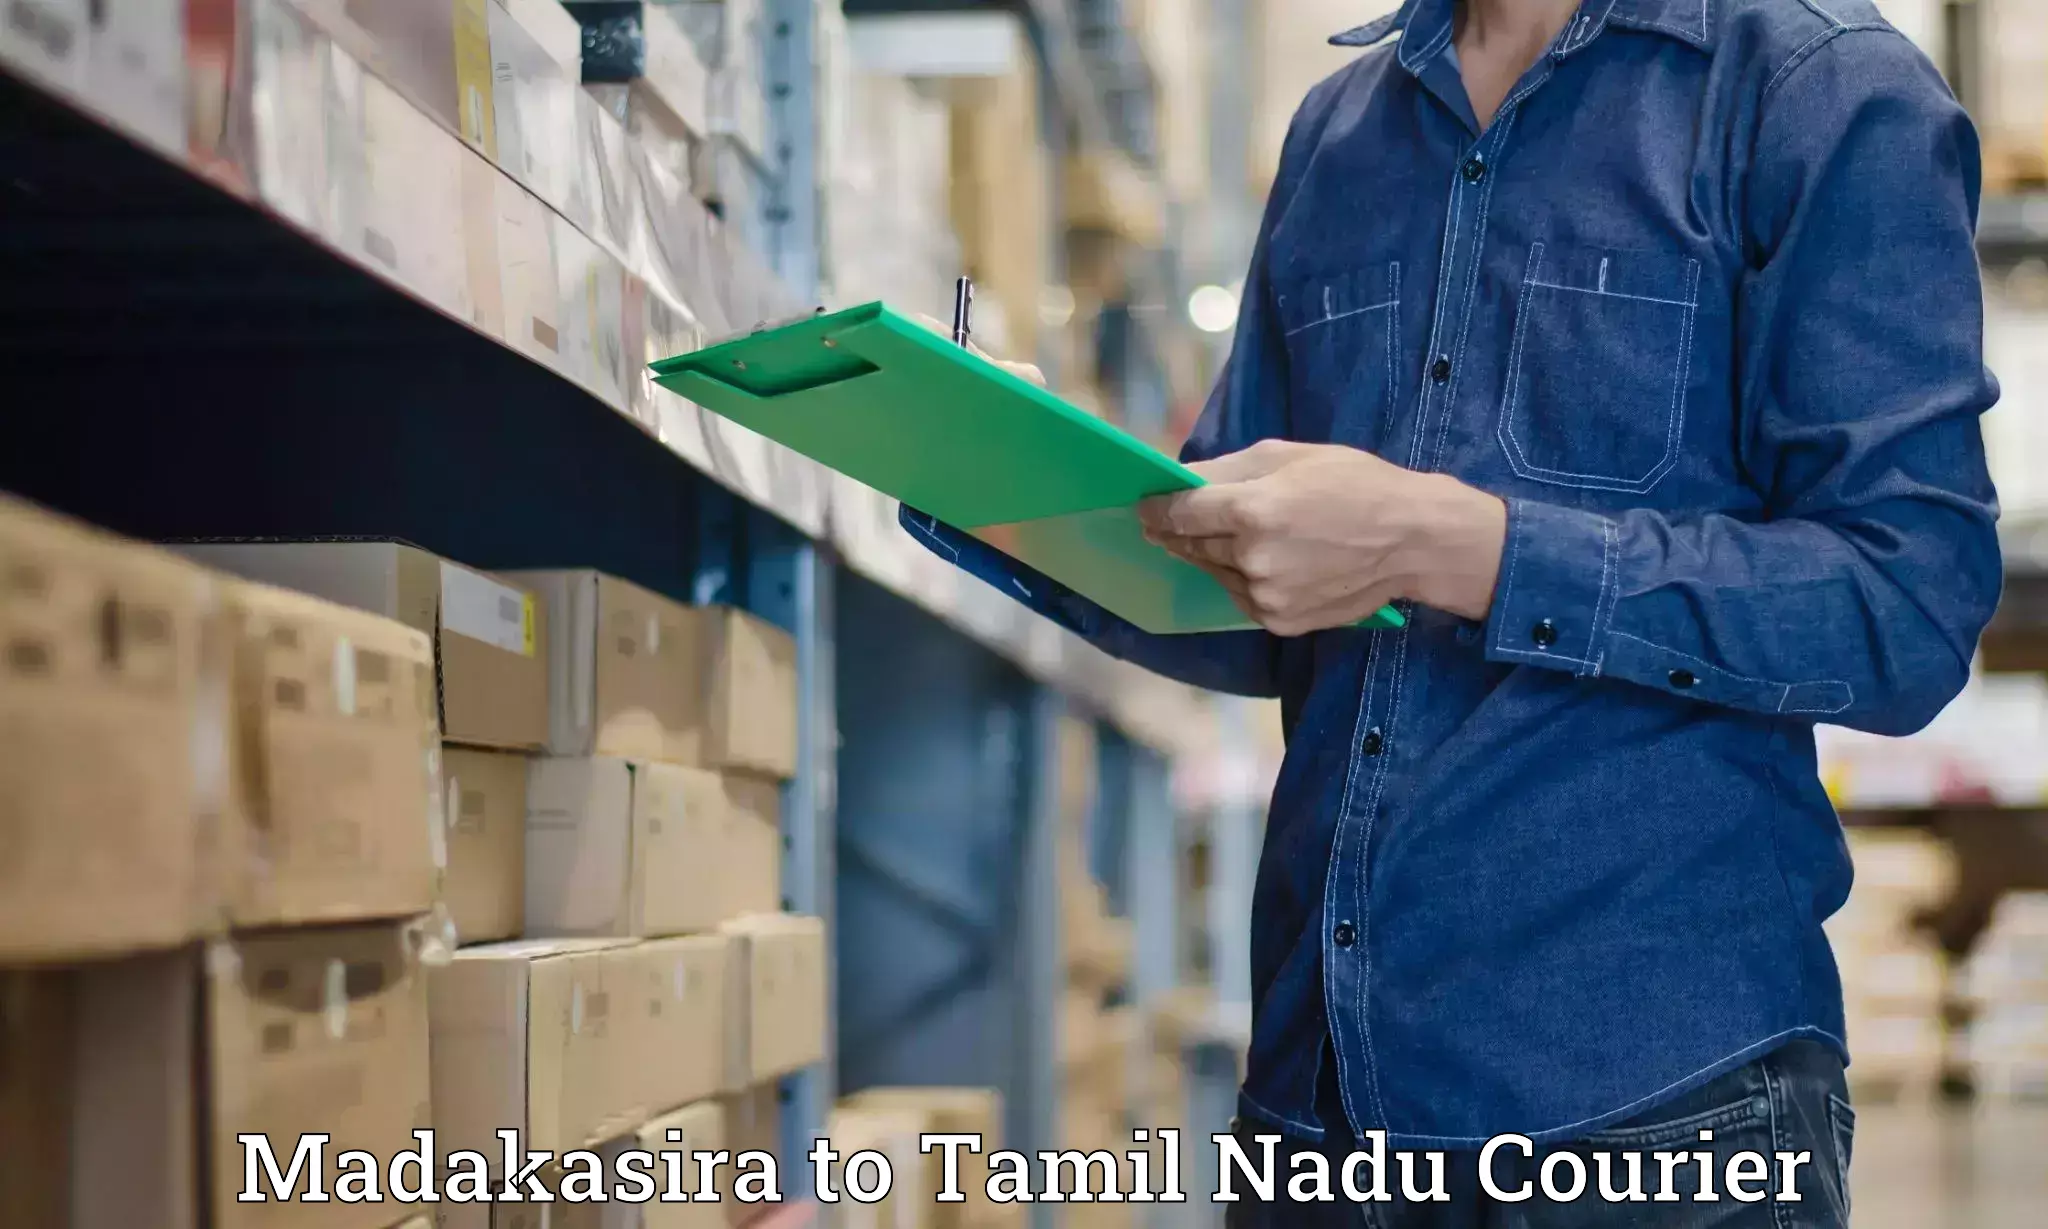 Efficient cargo handling Madakasira to Tamil Nadu